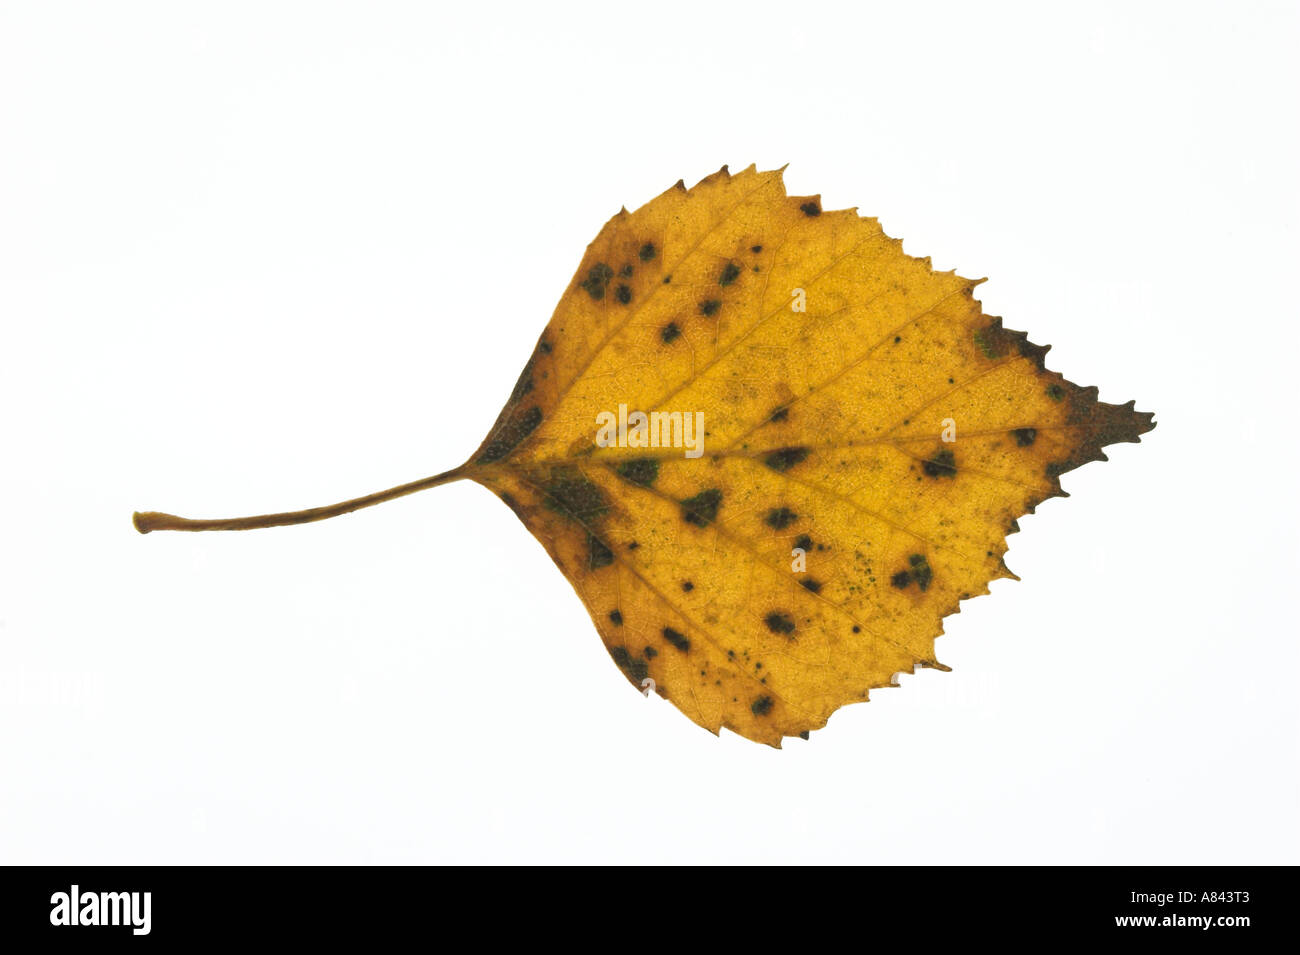 SILVER BIRCH yellow leaf against a white background Betula pendula Stock Photo